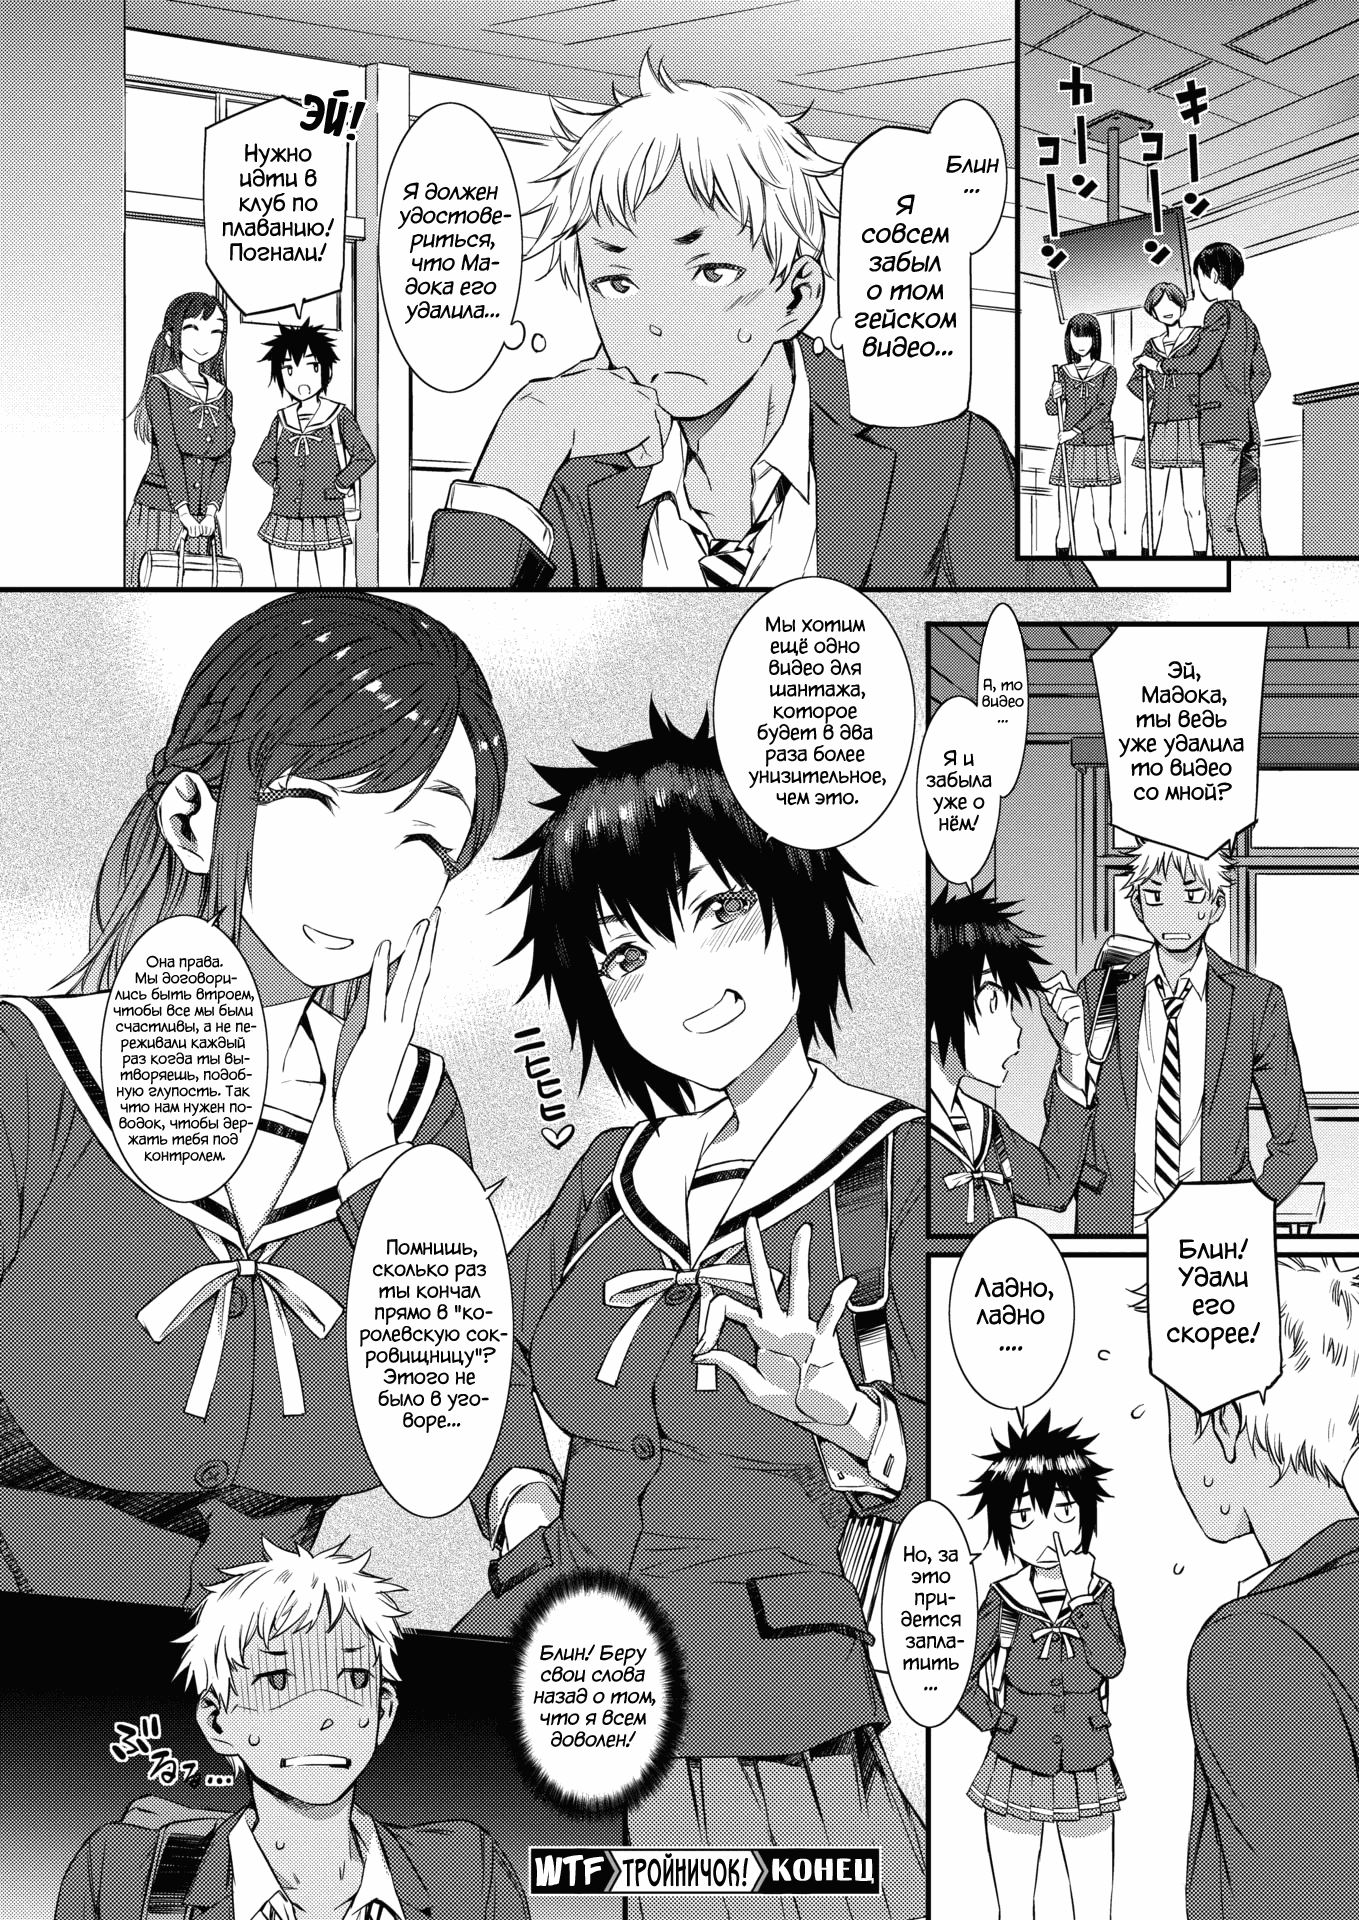 Julie's threesome manga